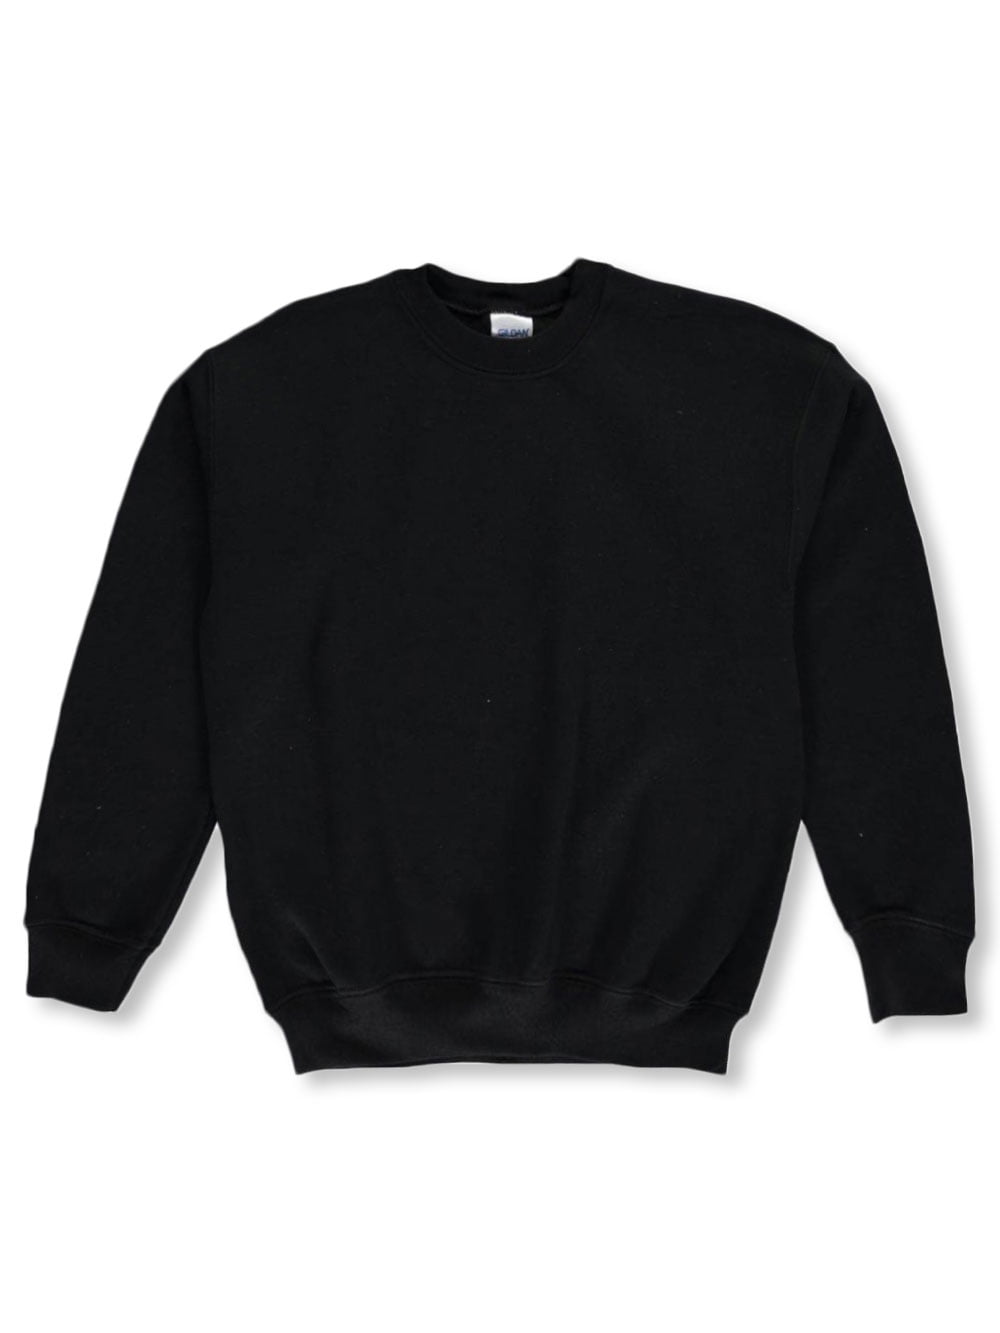 Gildan Unisex Youth Crewneck Sweatshirt (Sizes 4 - 20) - black, m/10-12  (Big Girls)